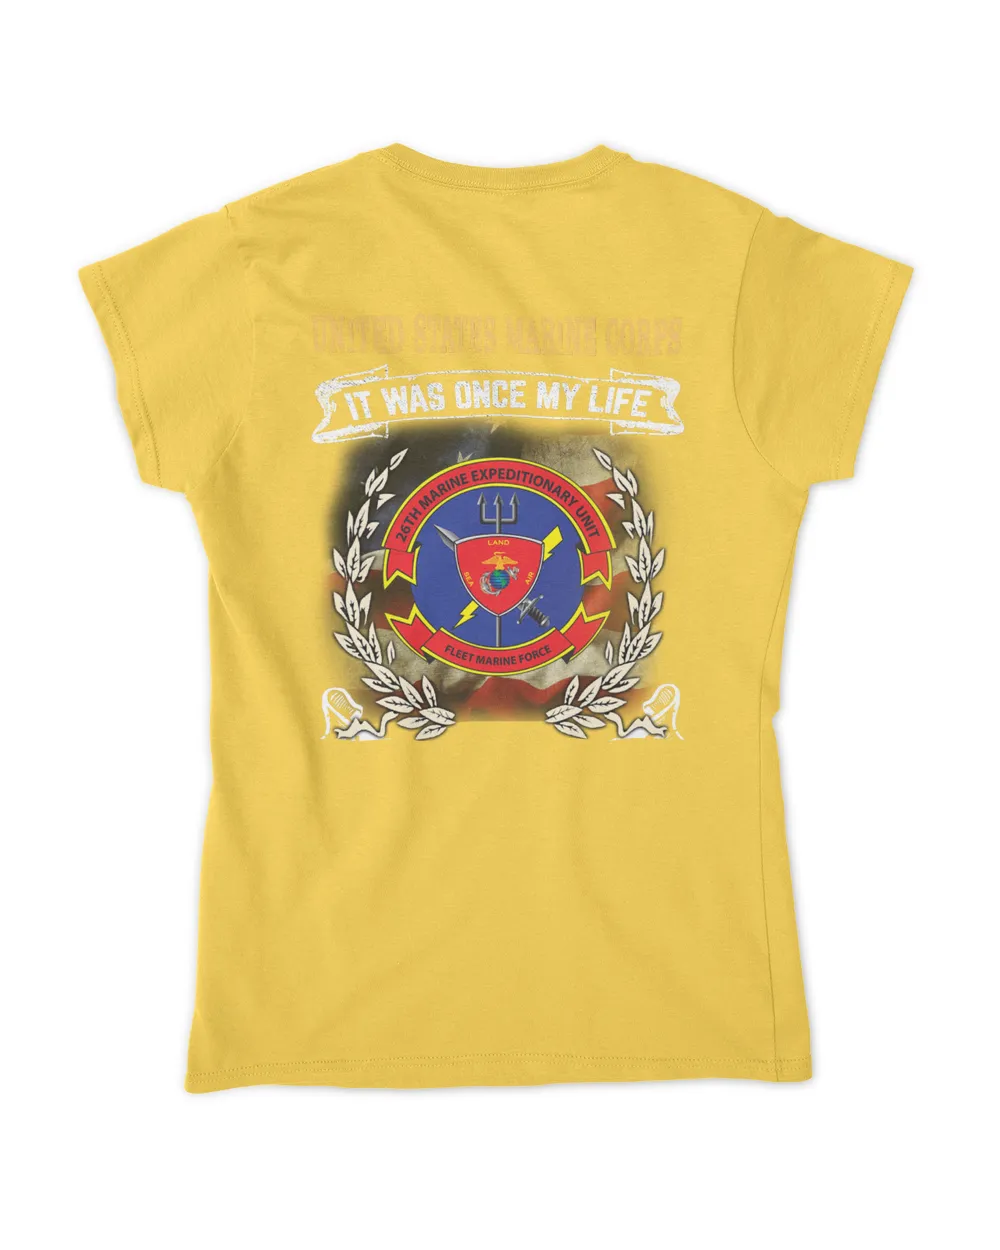 26th Marine Expeditionary Unit T-shirt